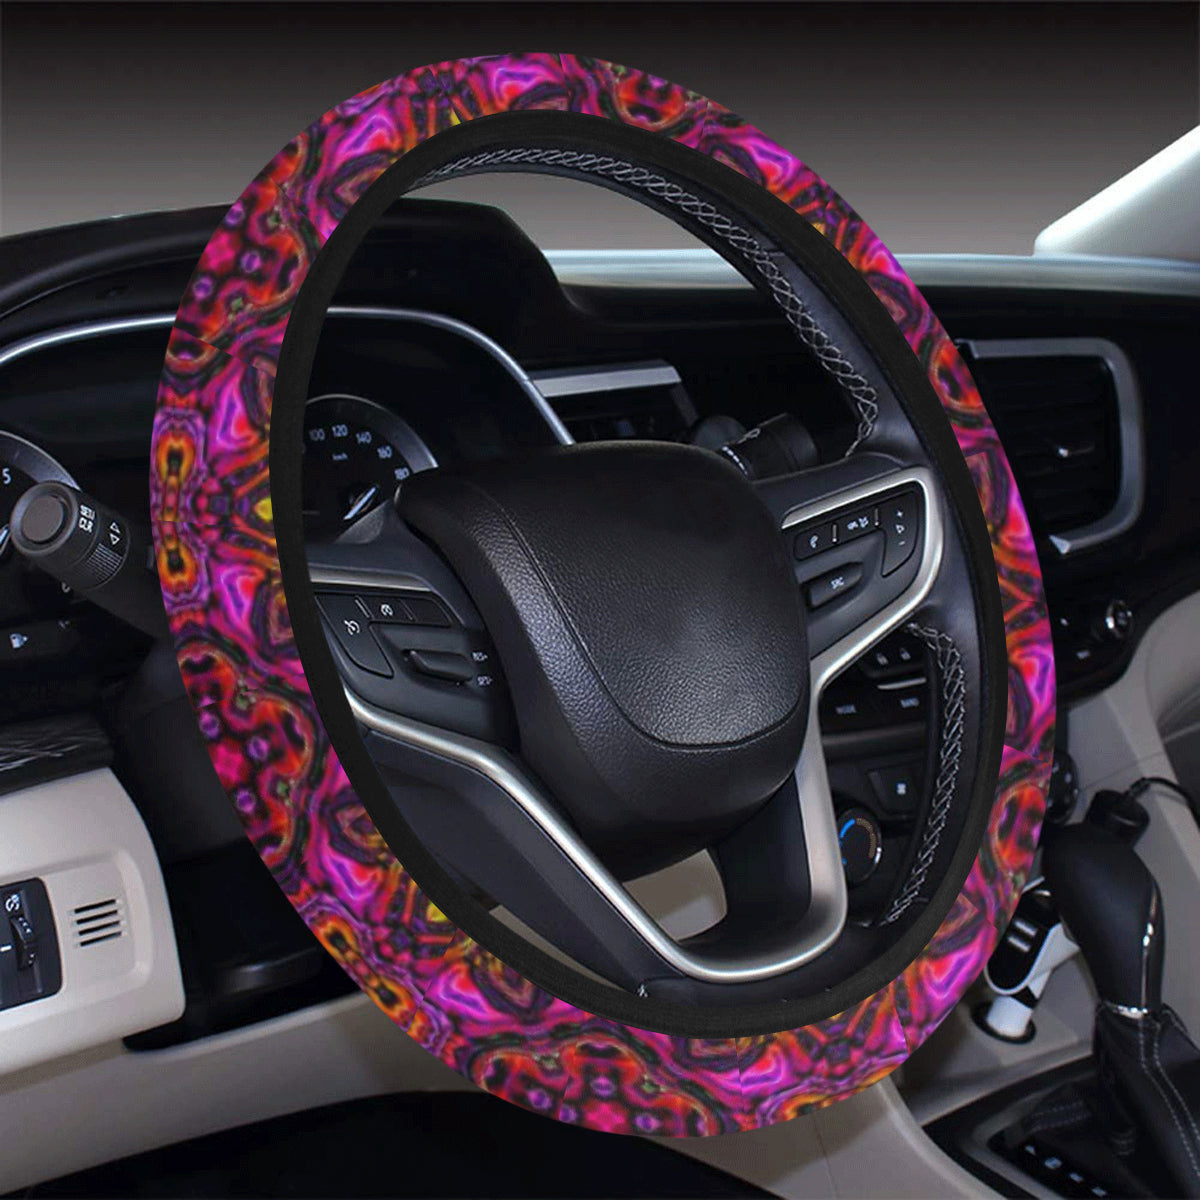 kaleidoscope Abstract Print Design Steering Wheel Cover with Elastic Edge